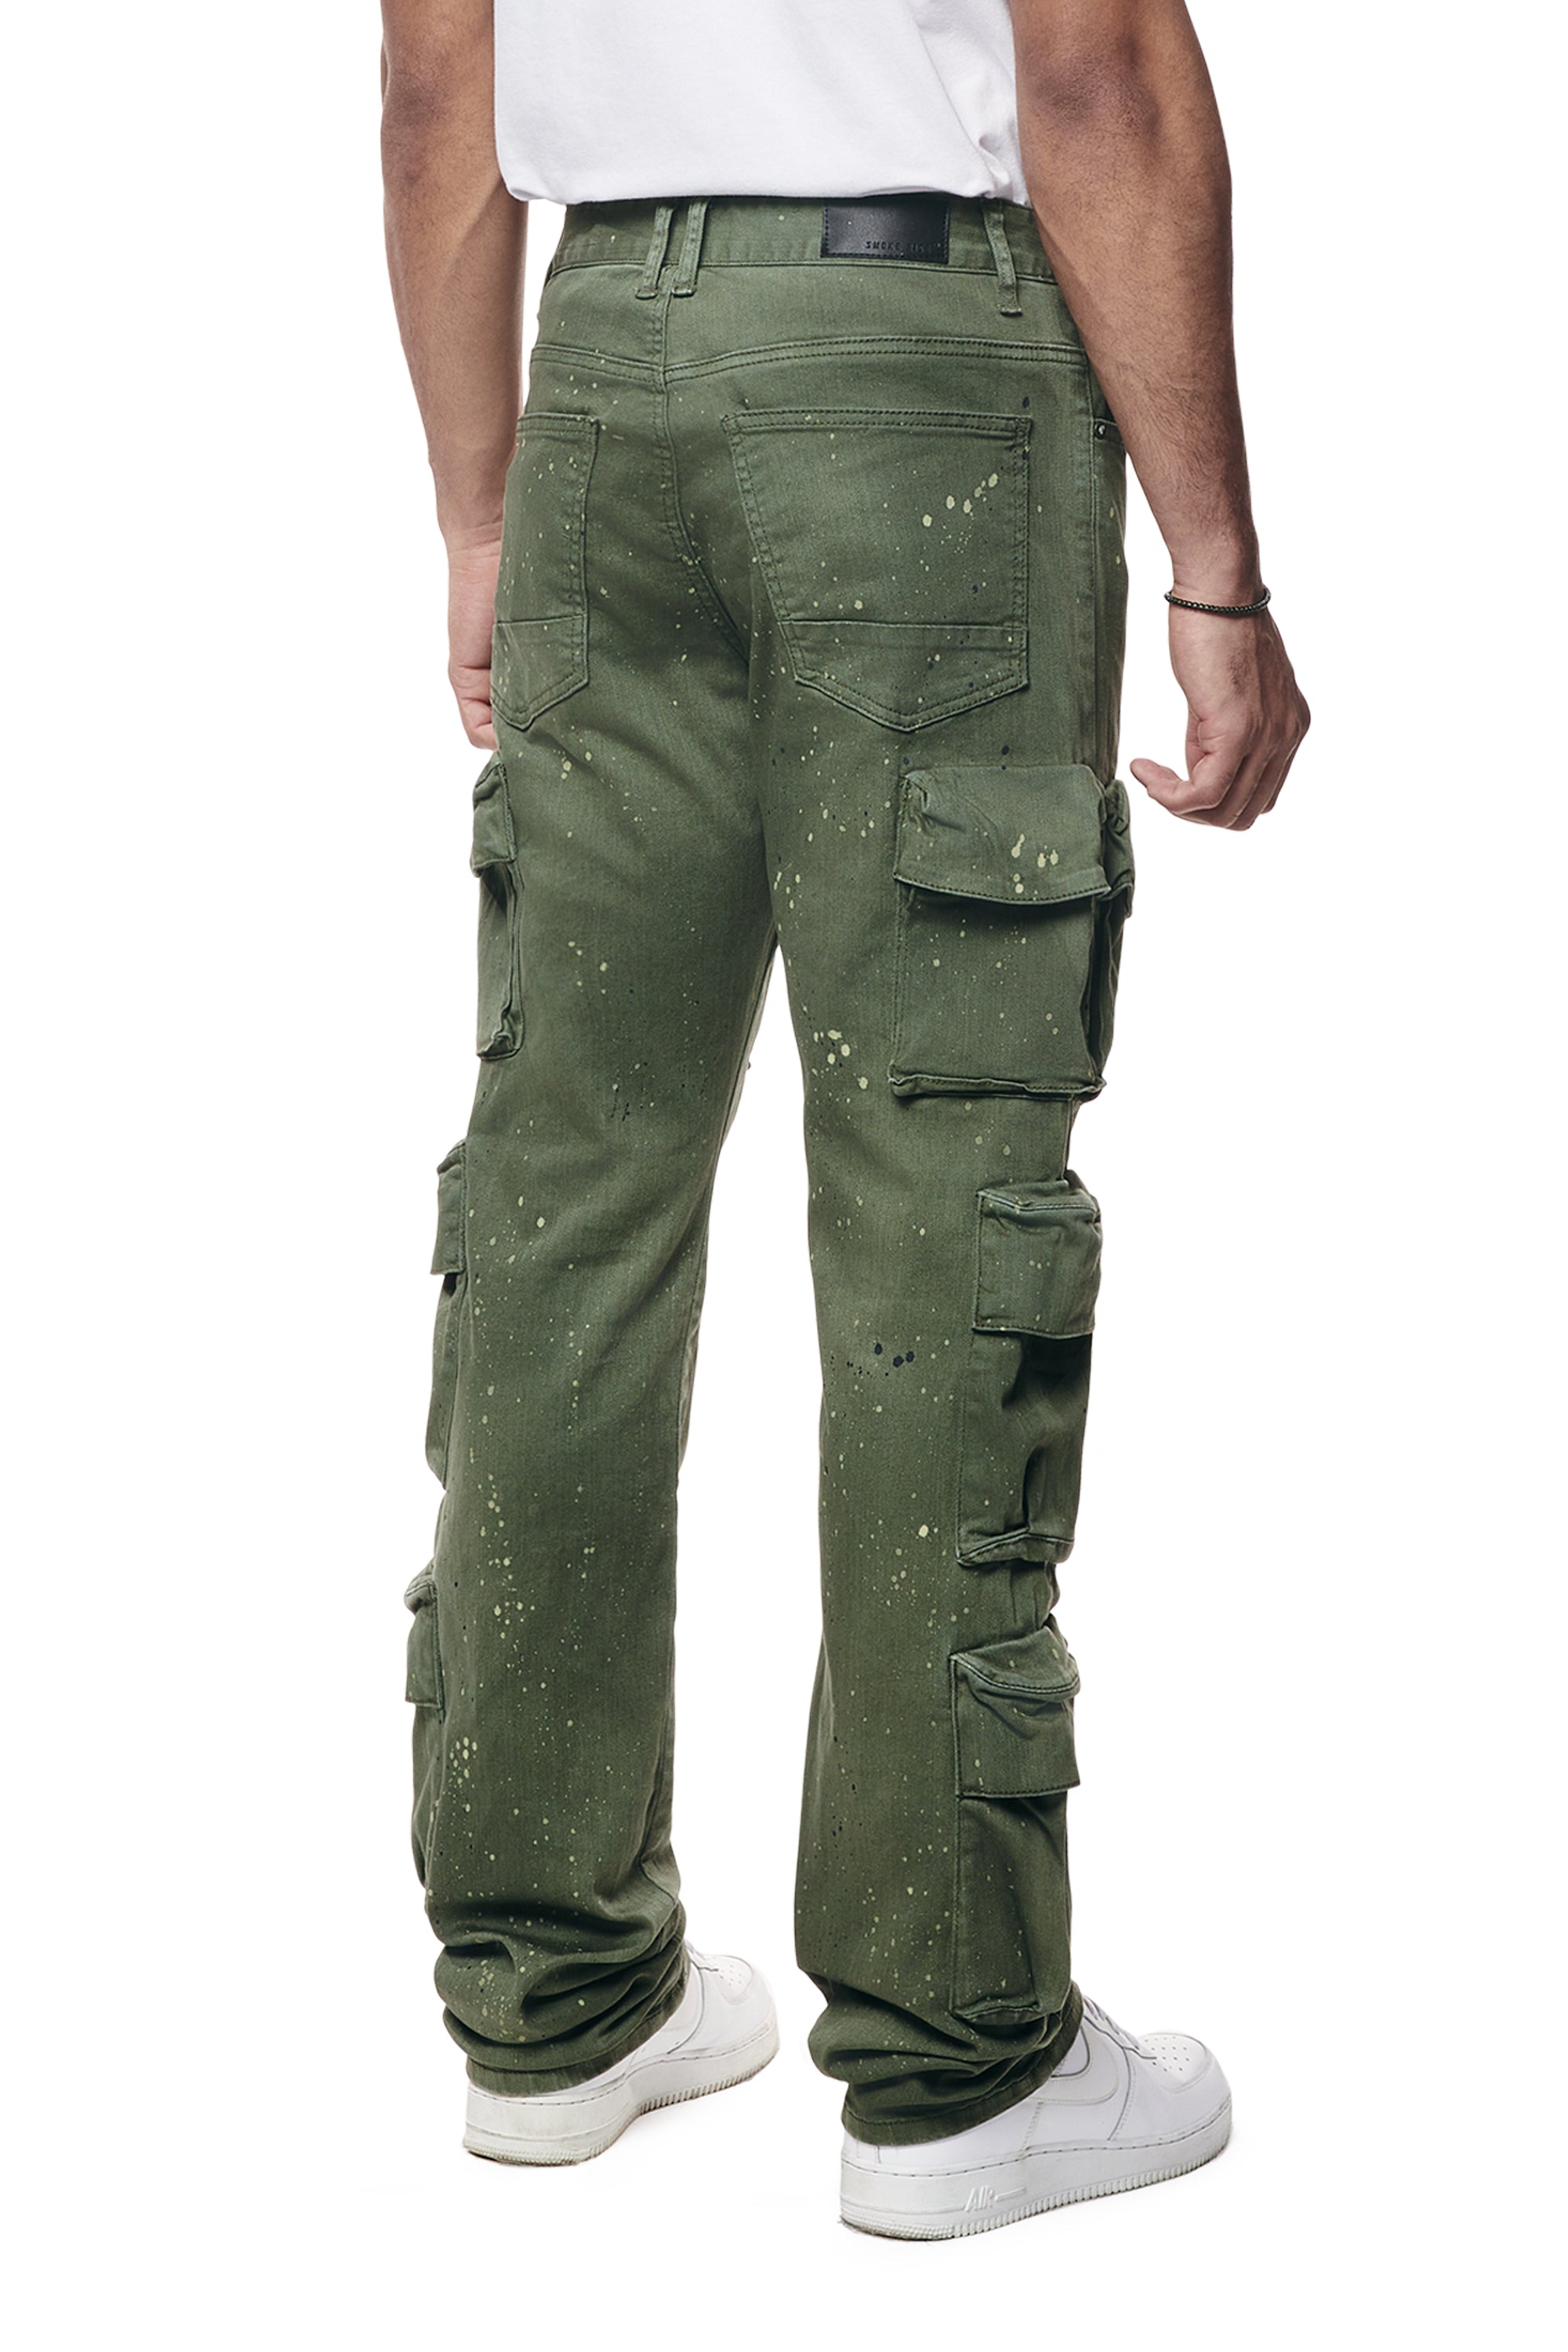 AEMY TWILL BROKEN TWILL BAKER PANTS / Army Twill Broken Twill Baker Pants –  Hatchet Outdoor Supply Japan